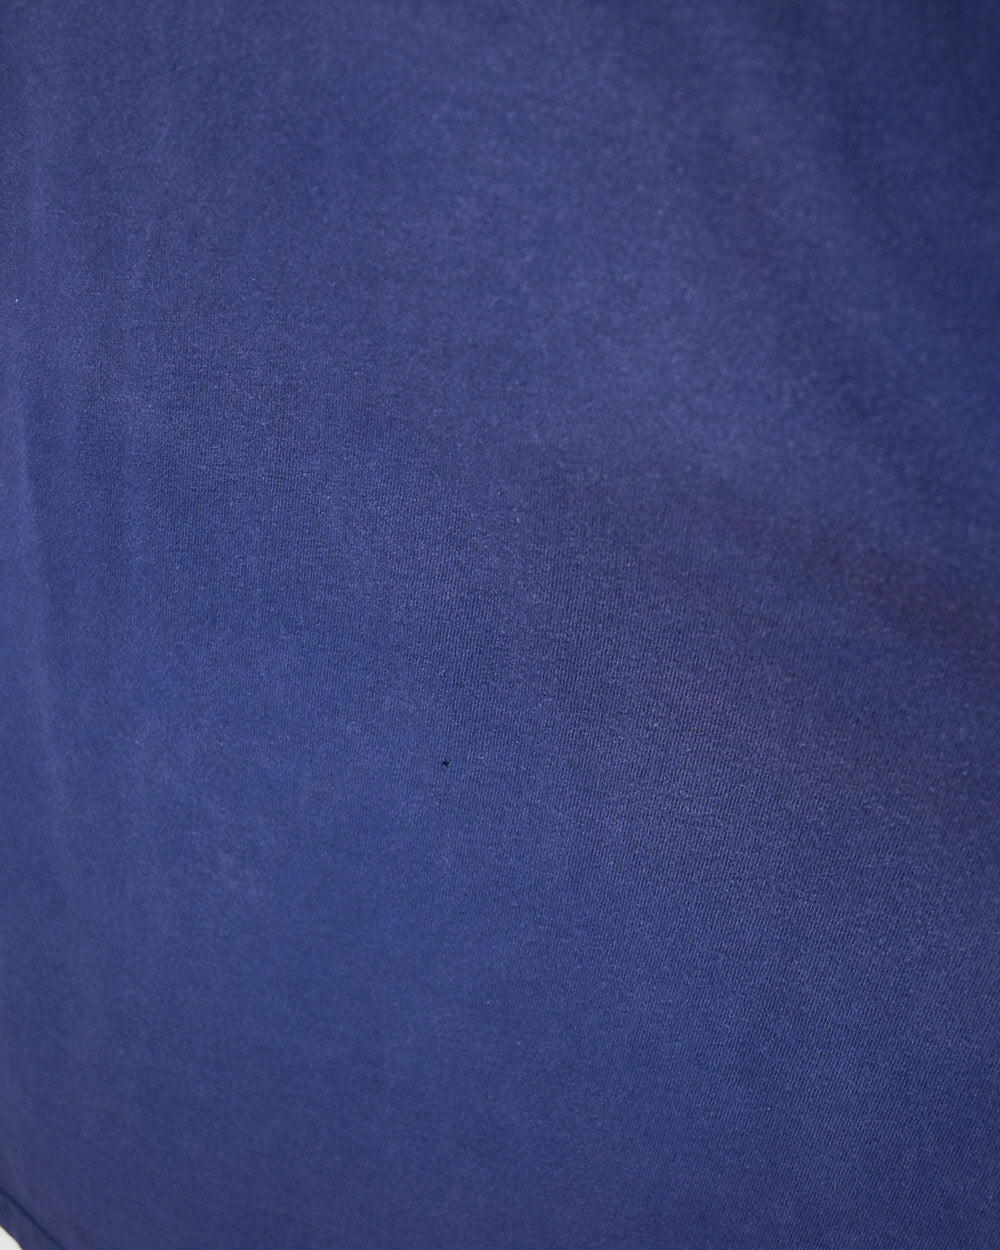 Blue Nike T-Shirt - X-Large